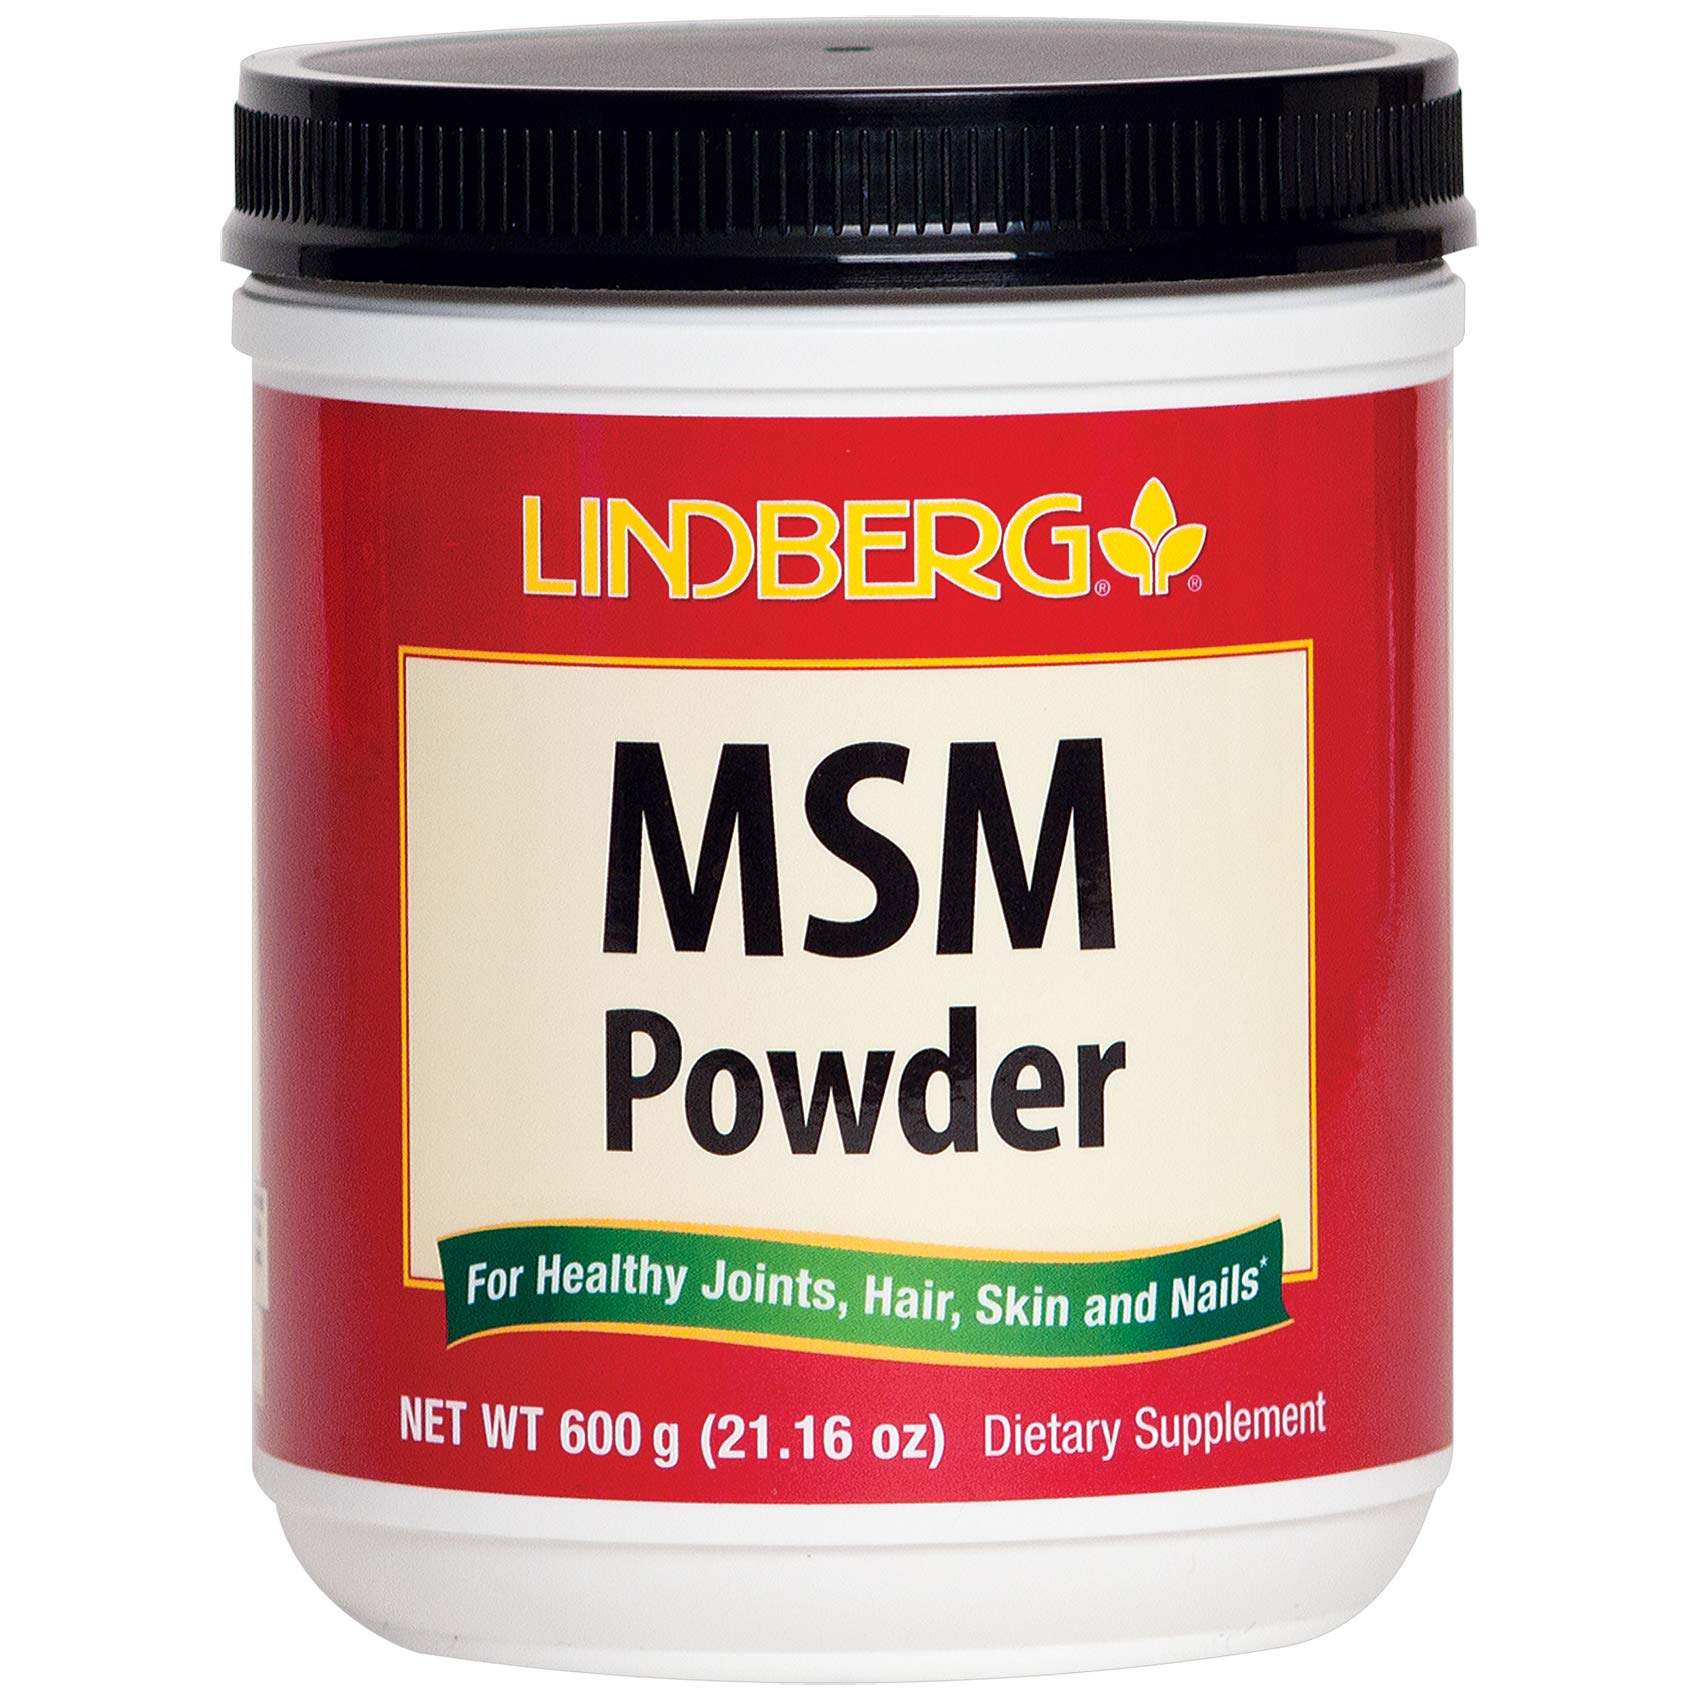 Lindberg MSM Powder 600 Grams (21.16 Oz) - for Healthy Joints, Hair, Skin and Nails*